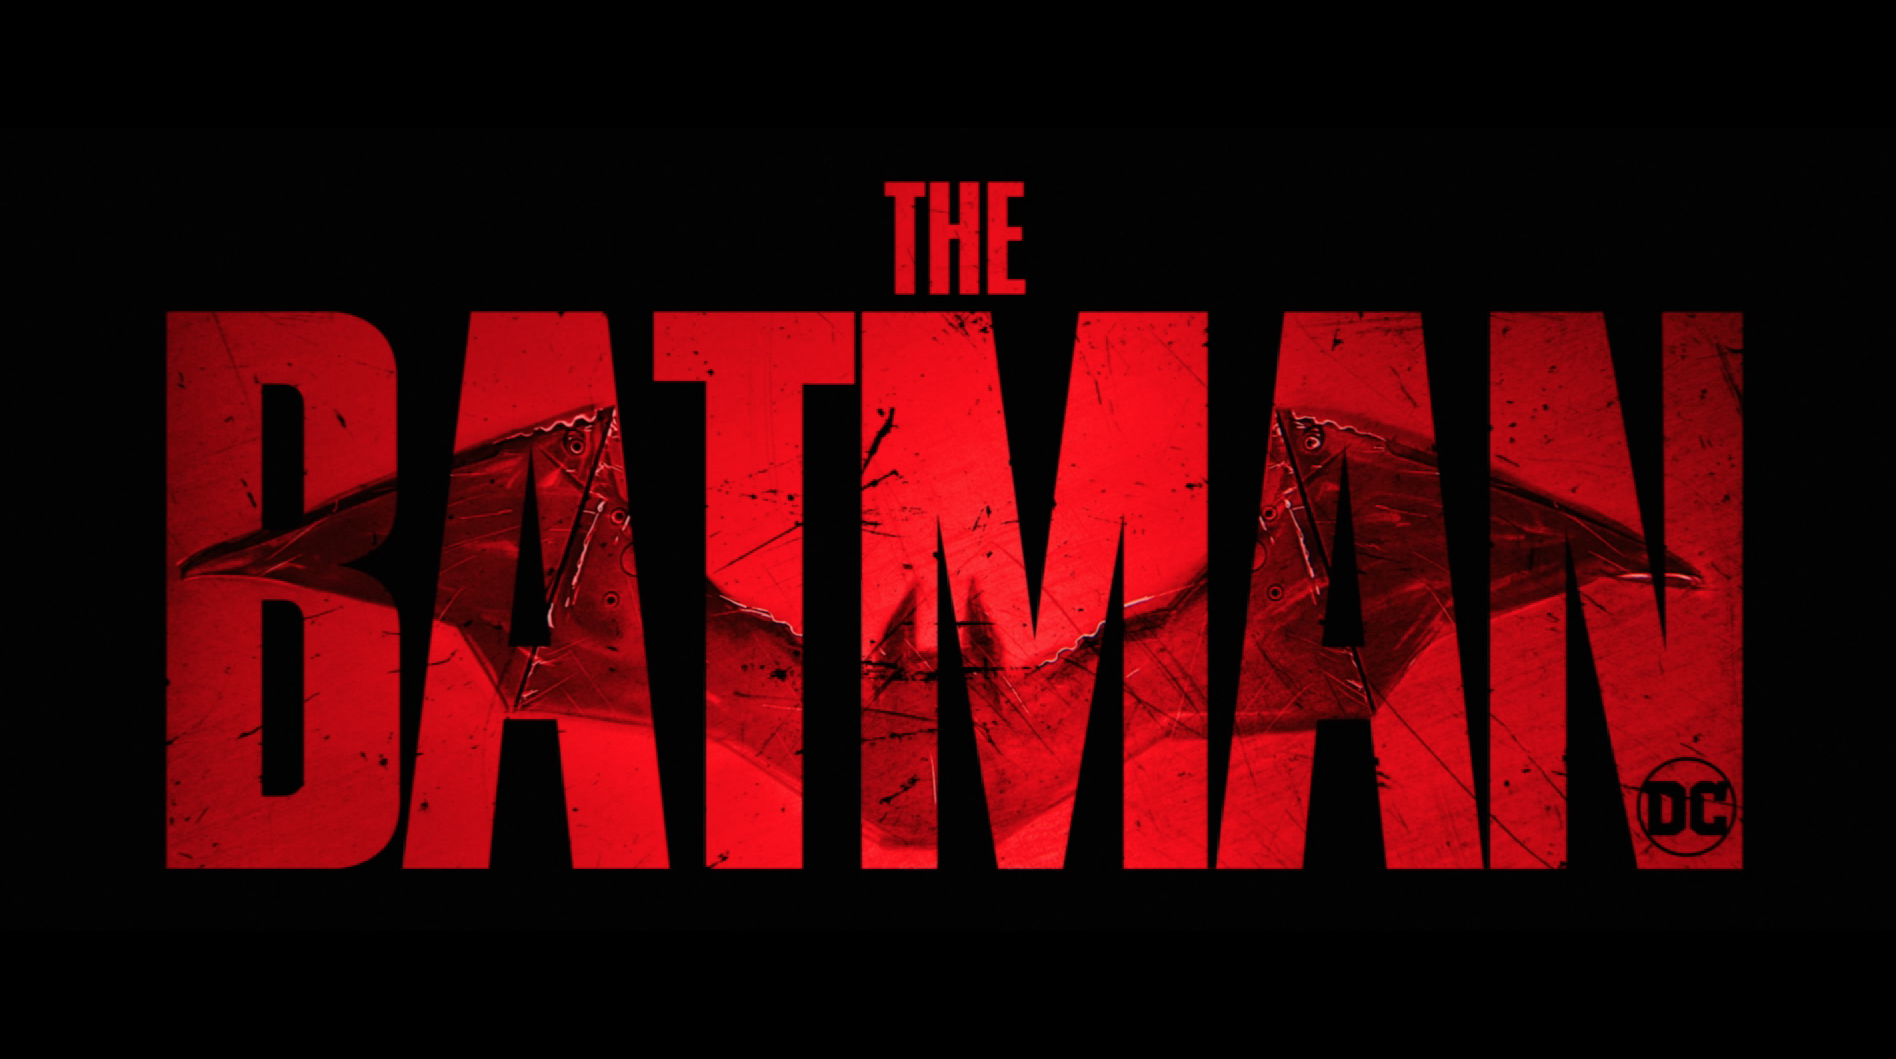 The new 'The Batman' logo.